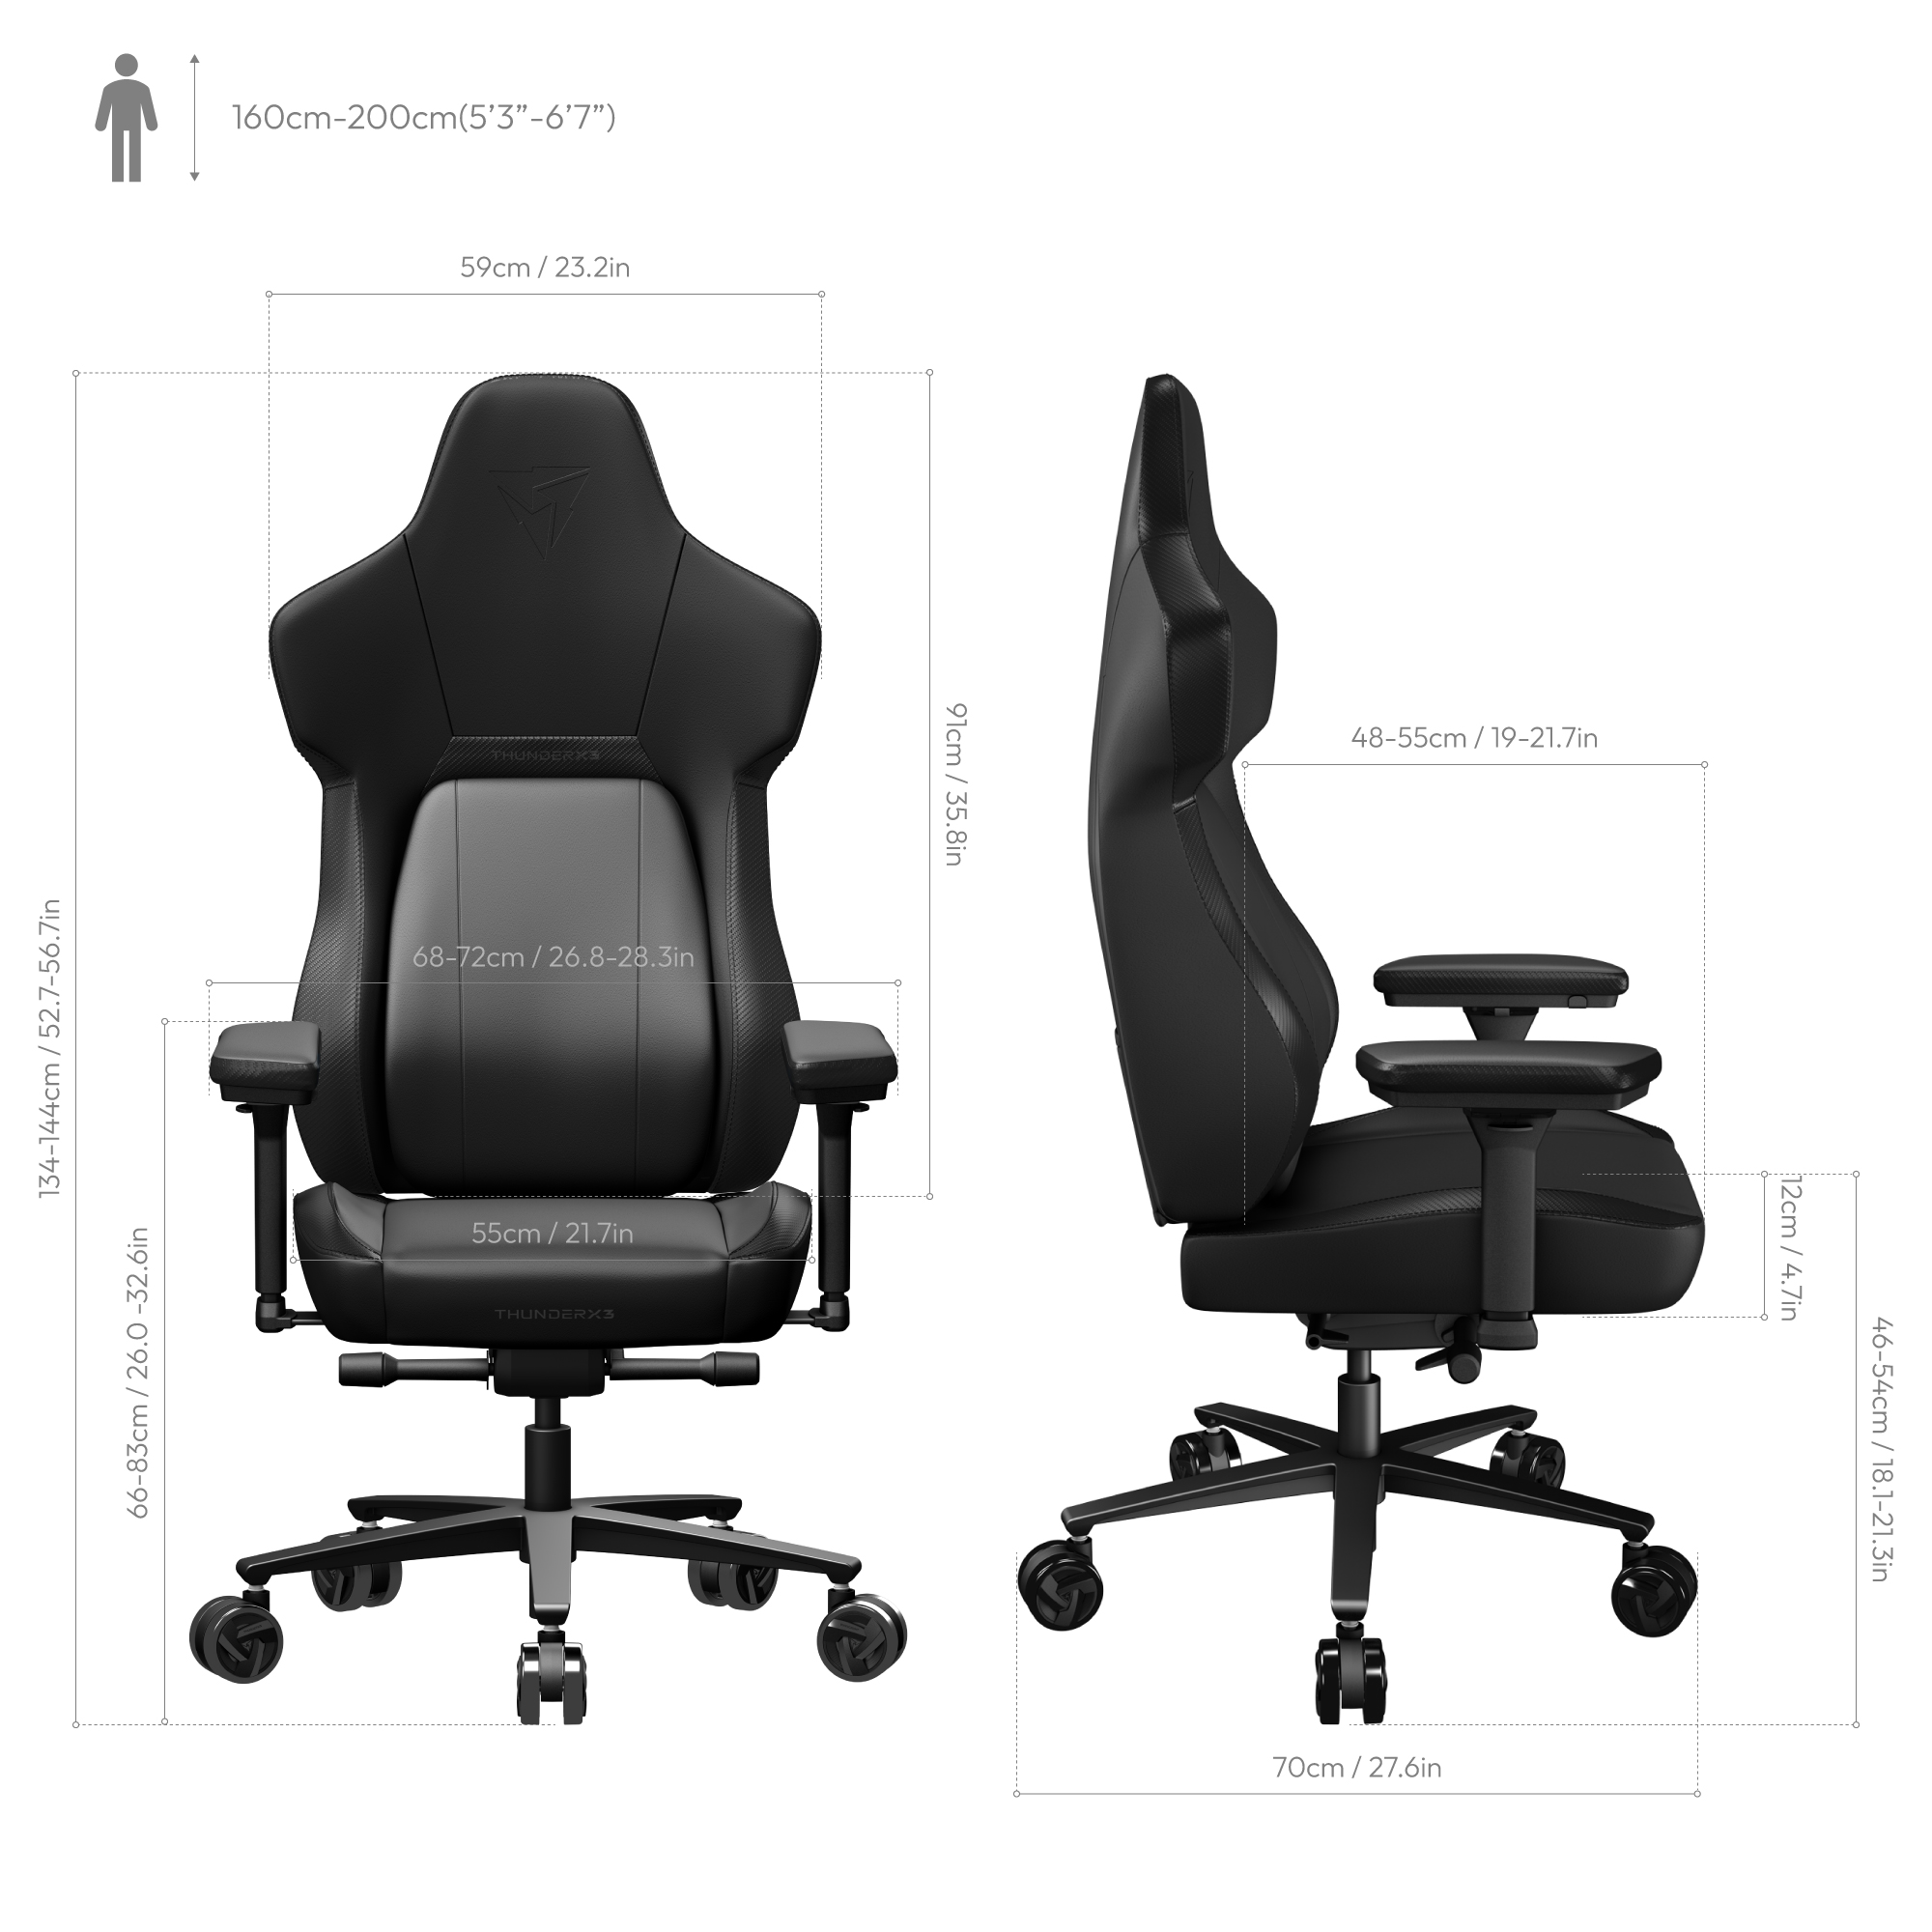 ThunderX3 CORE Modern Gaming Chair Black dimensions